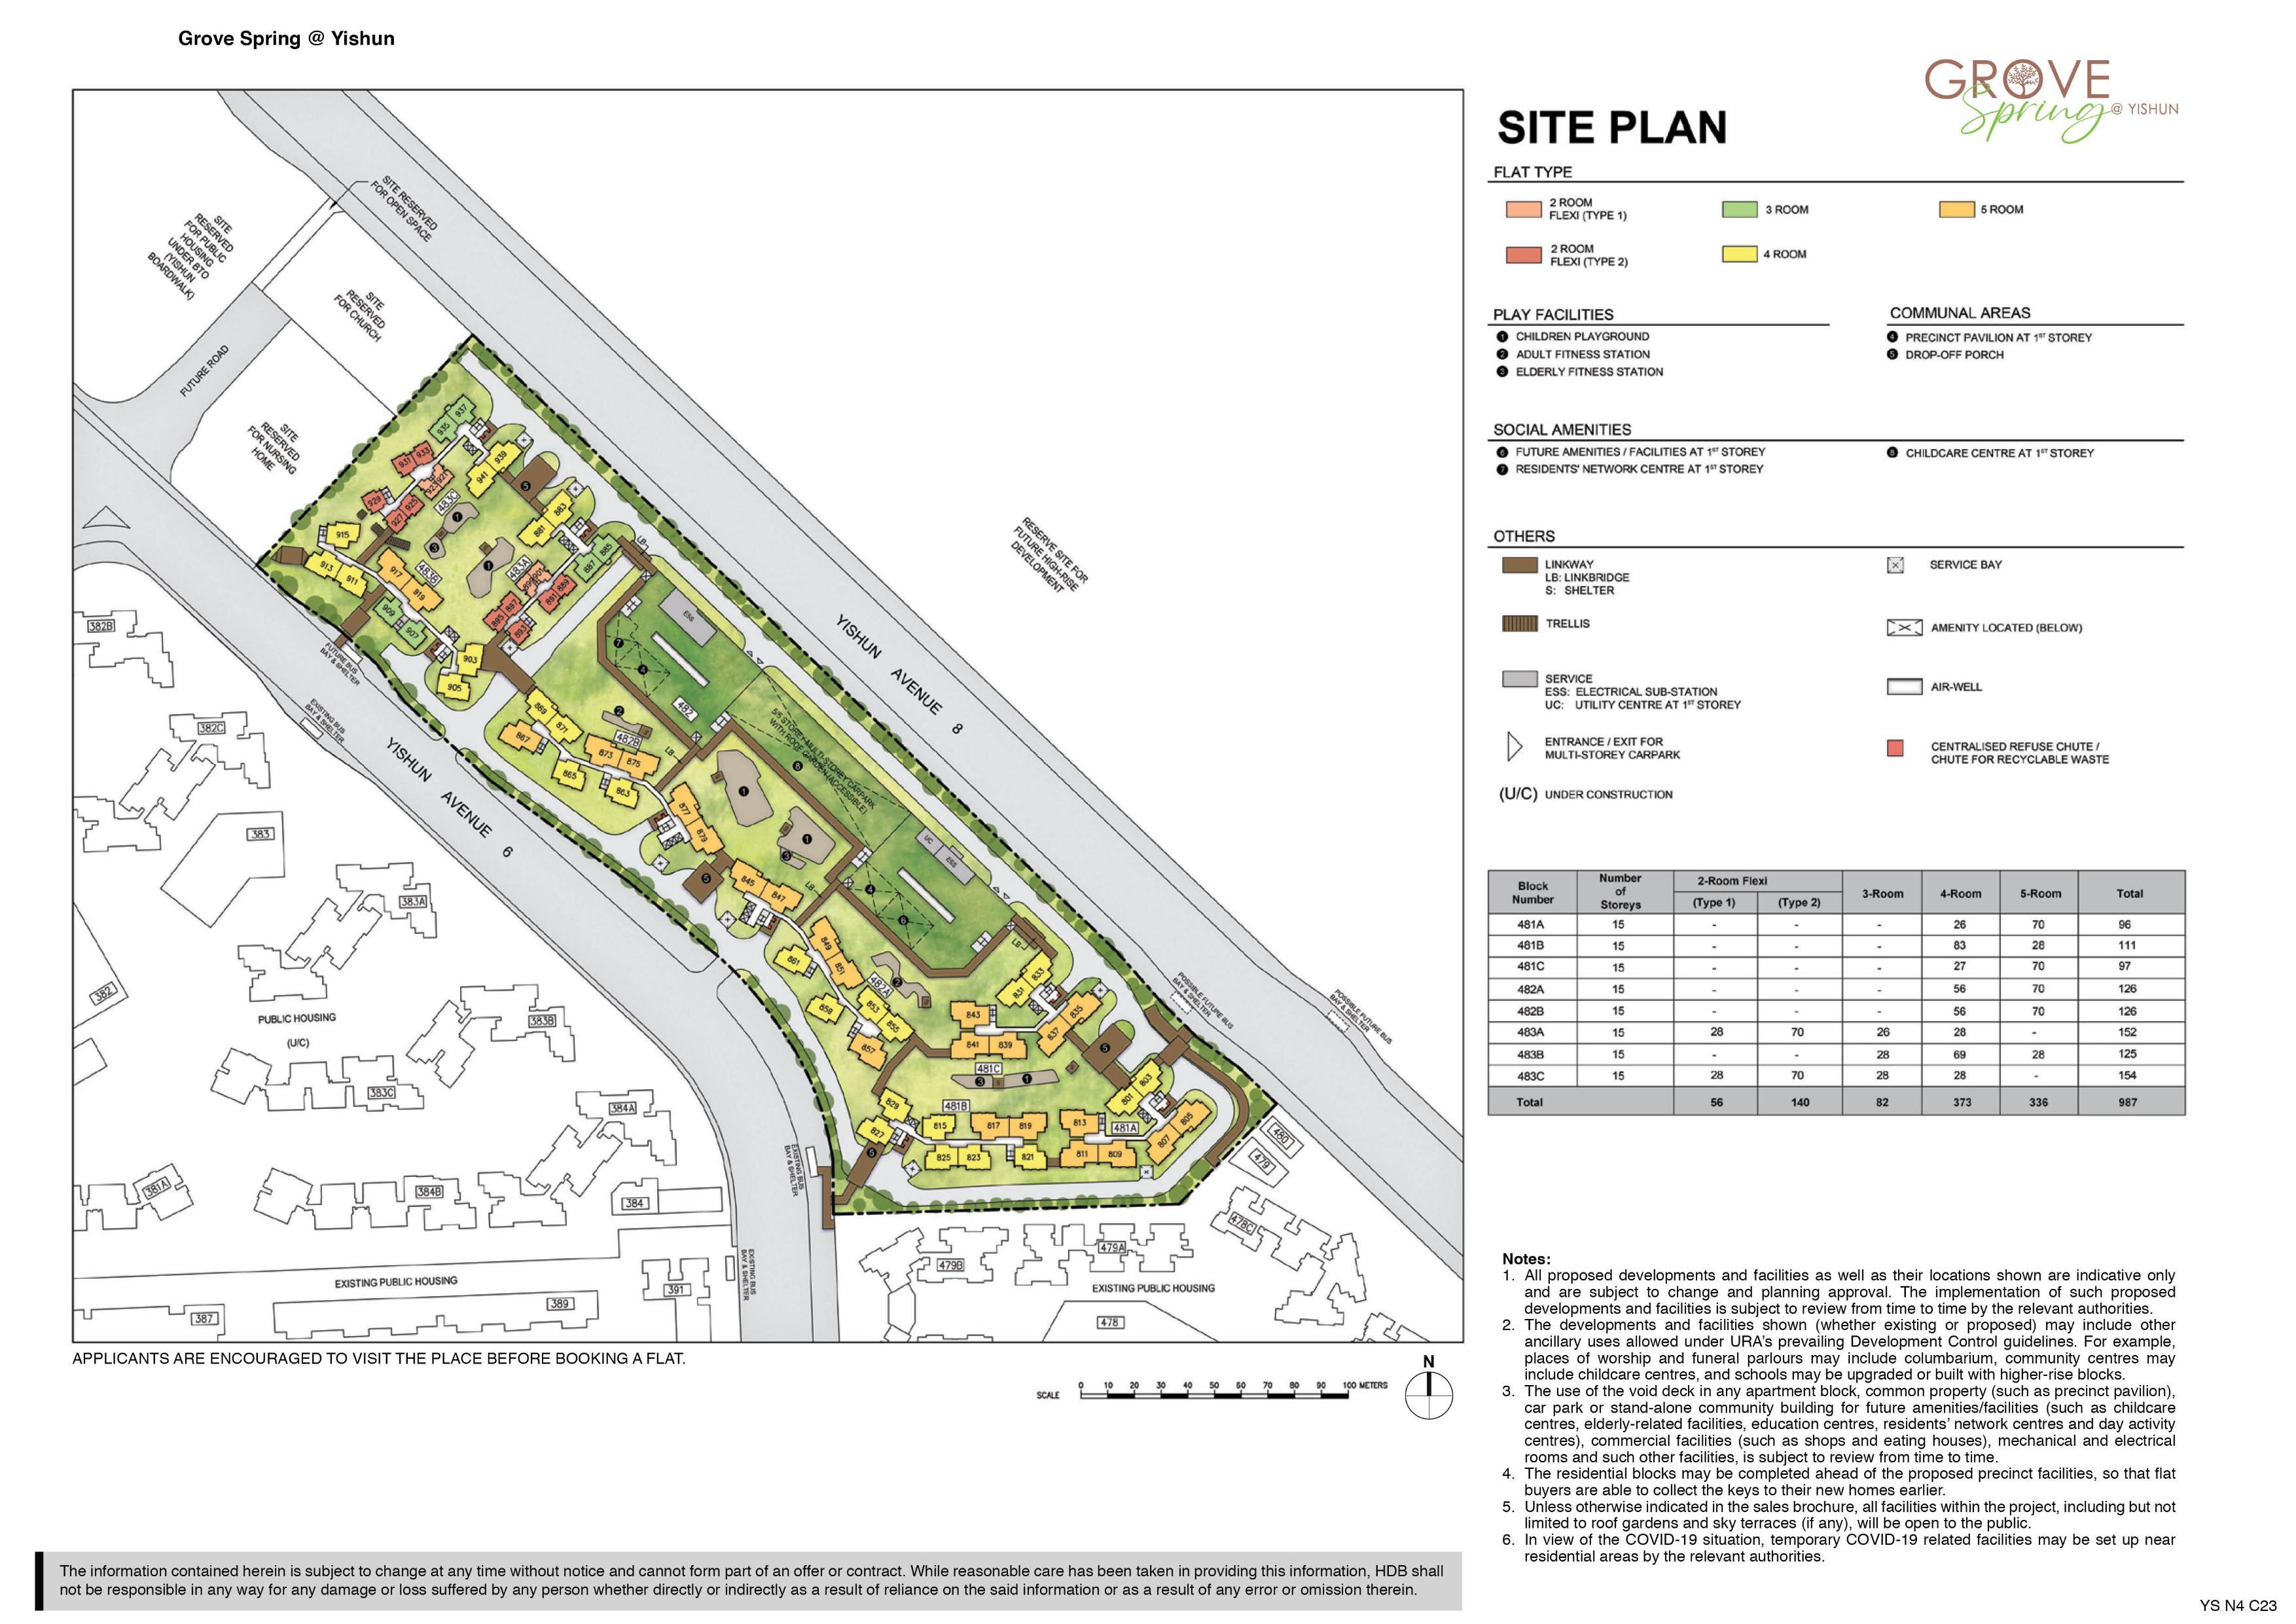 Grove Spring @ Yishun site-plan